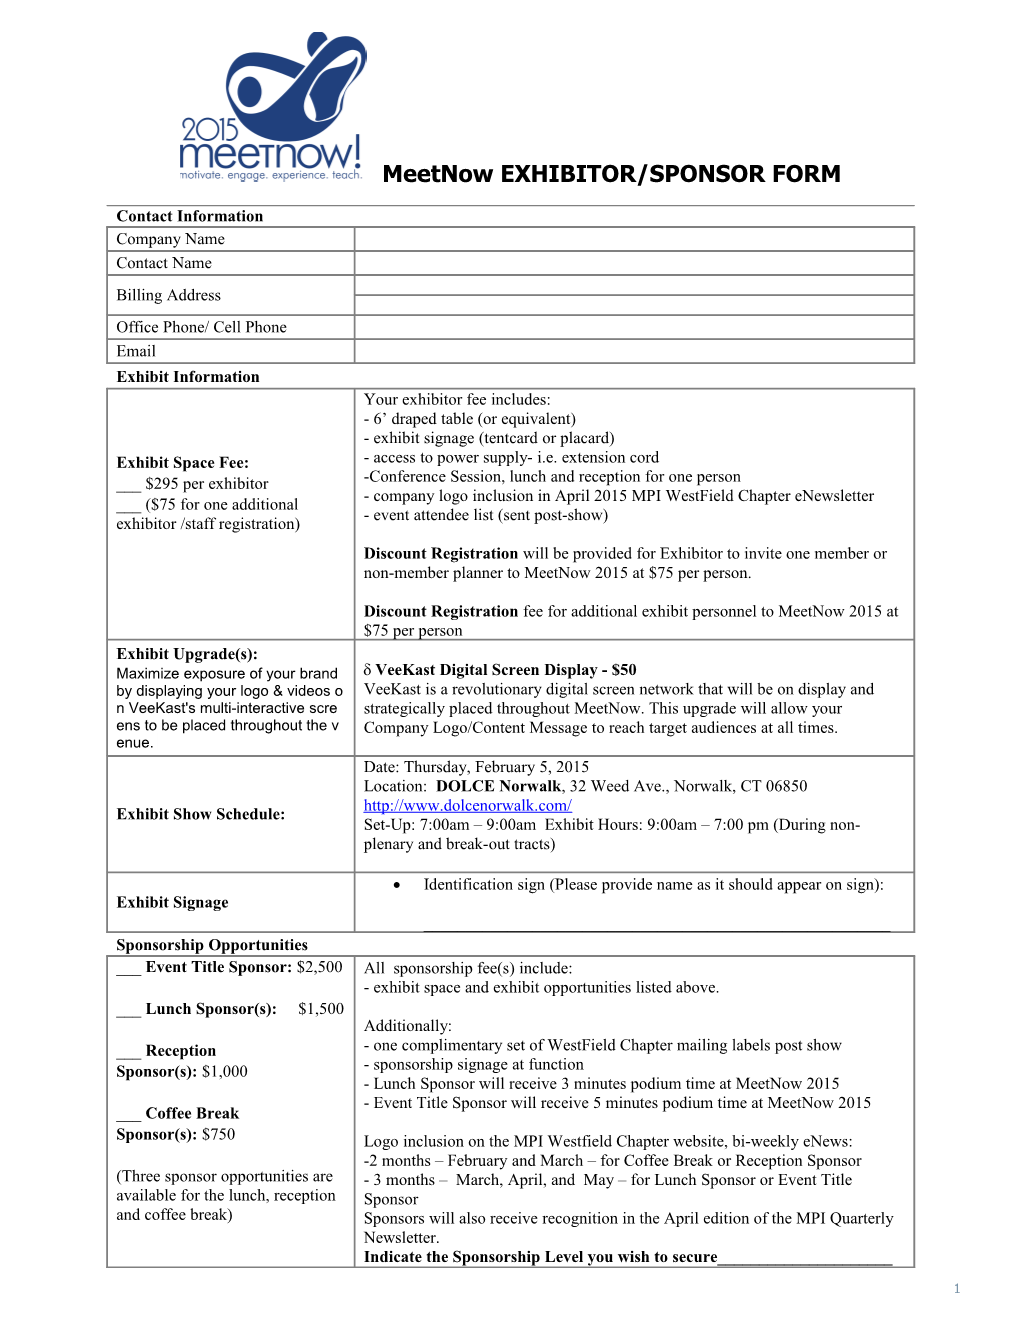 Exhibitor Information Form